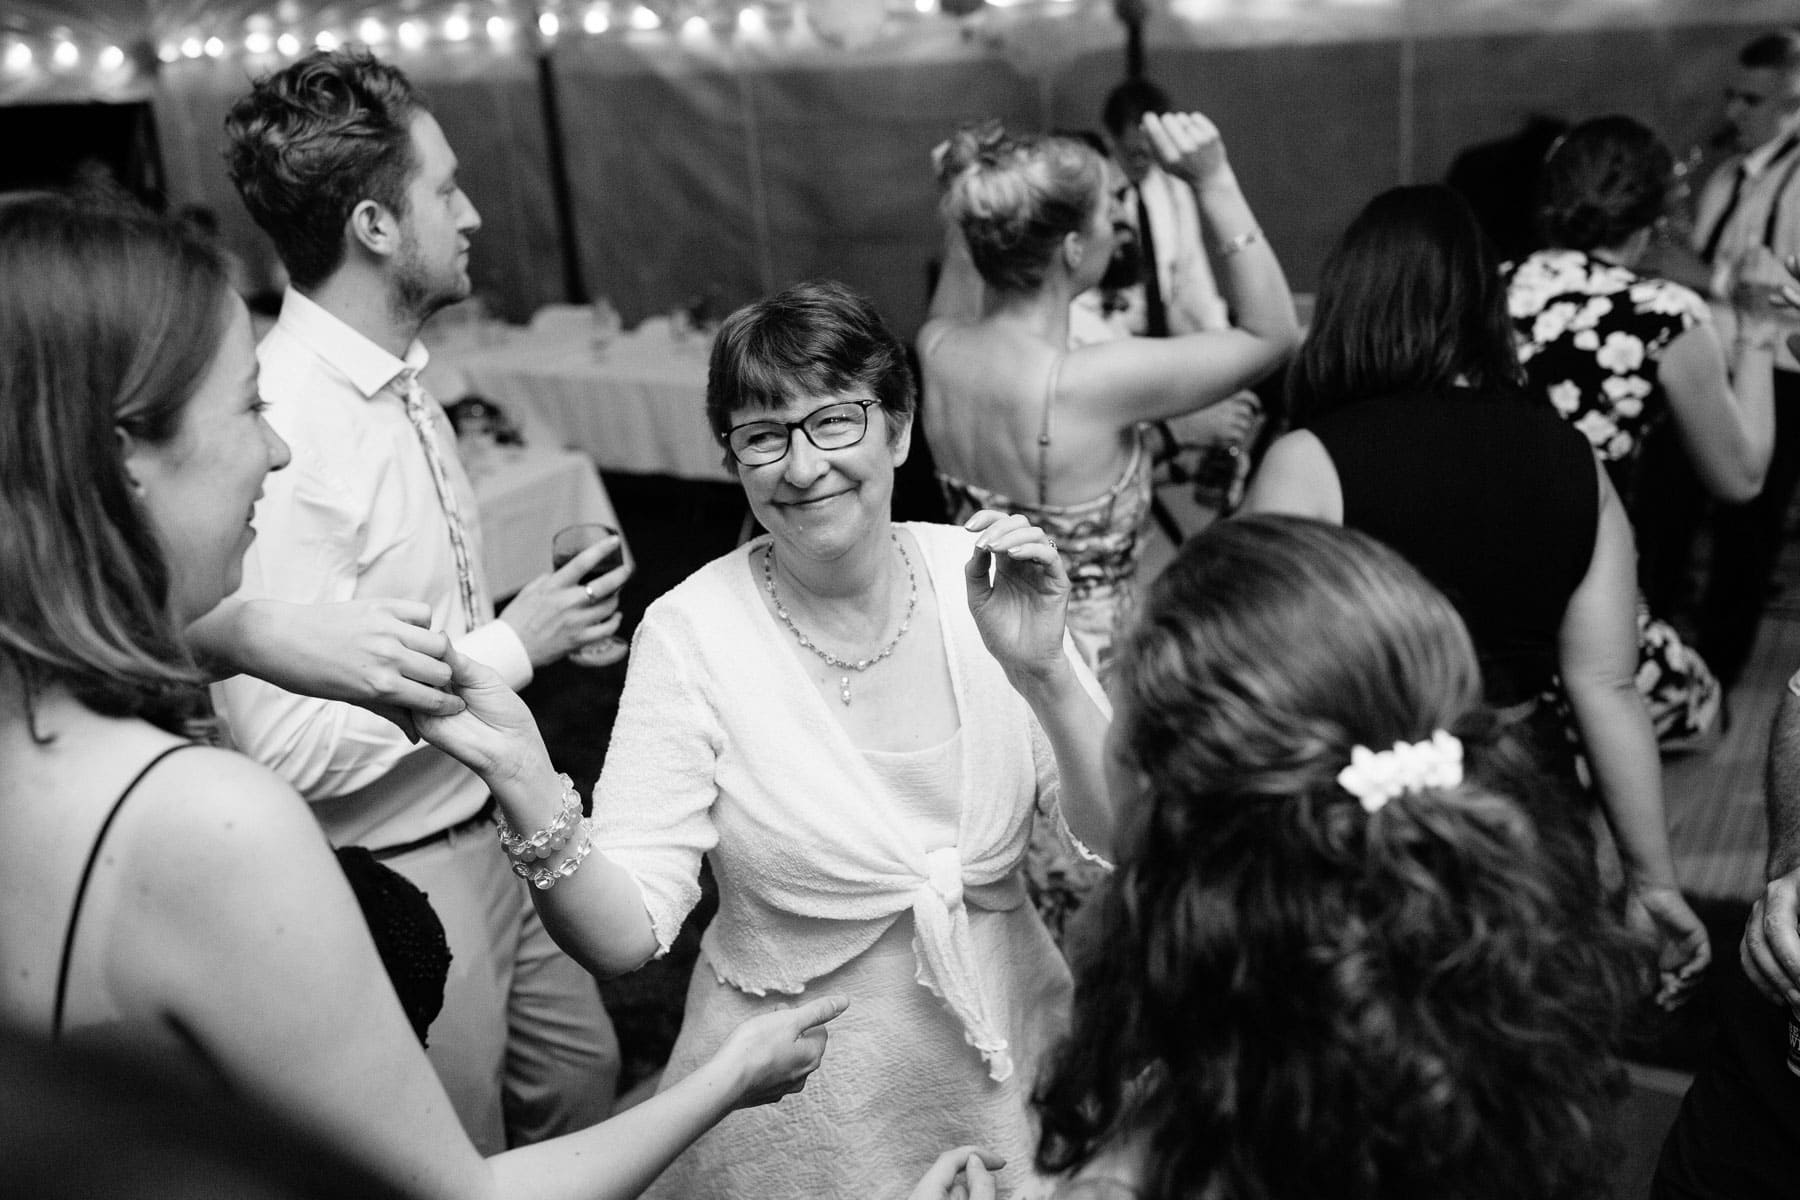 dancing at a tented wedding reception | Kelly Benvenuto Photography